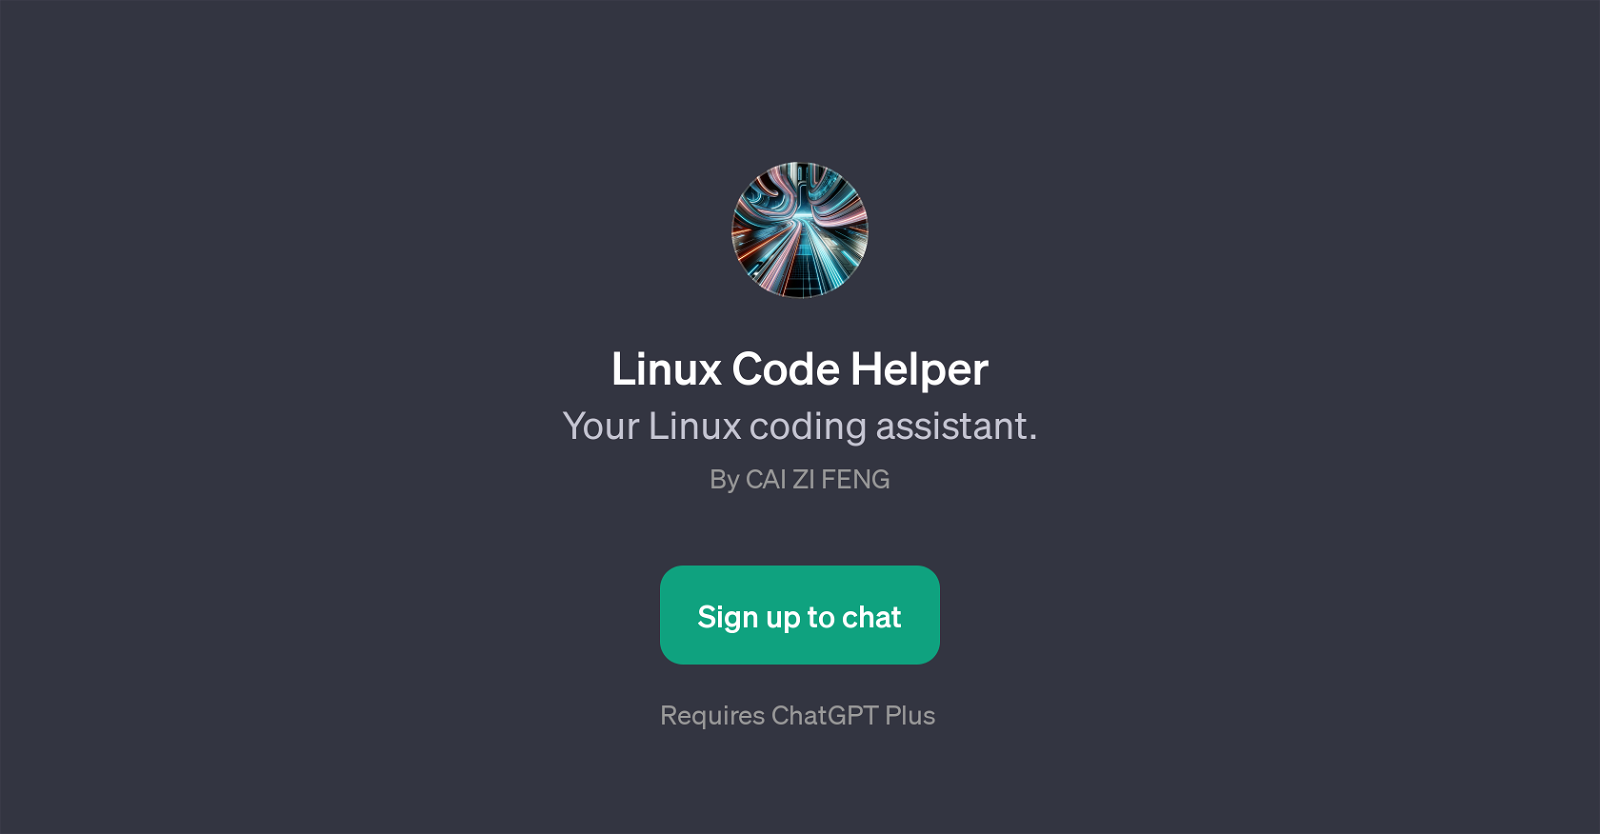 Linux Code Helper website